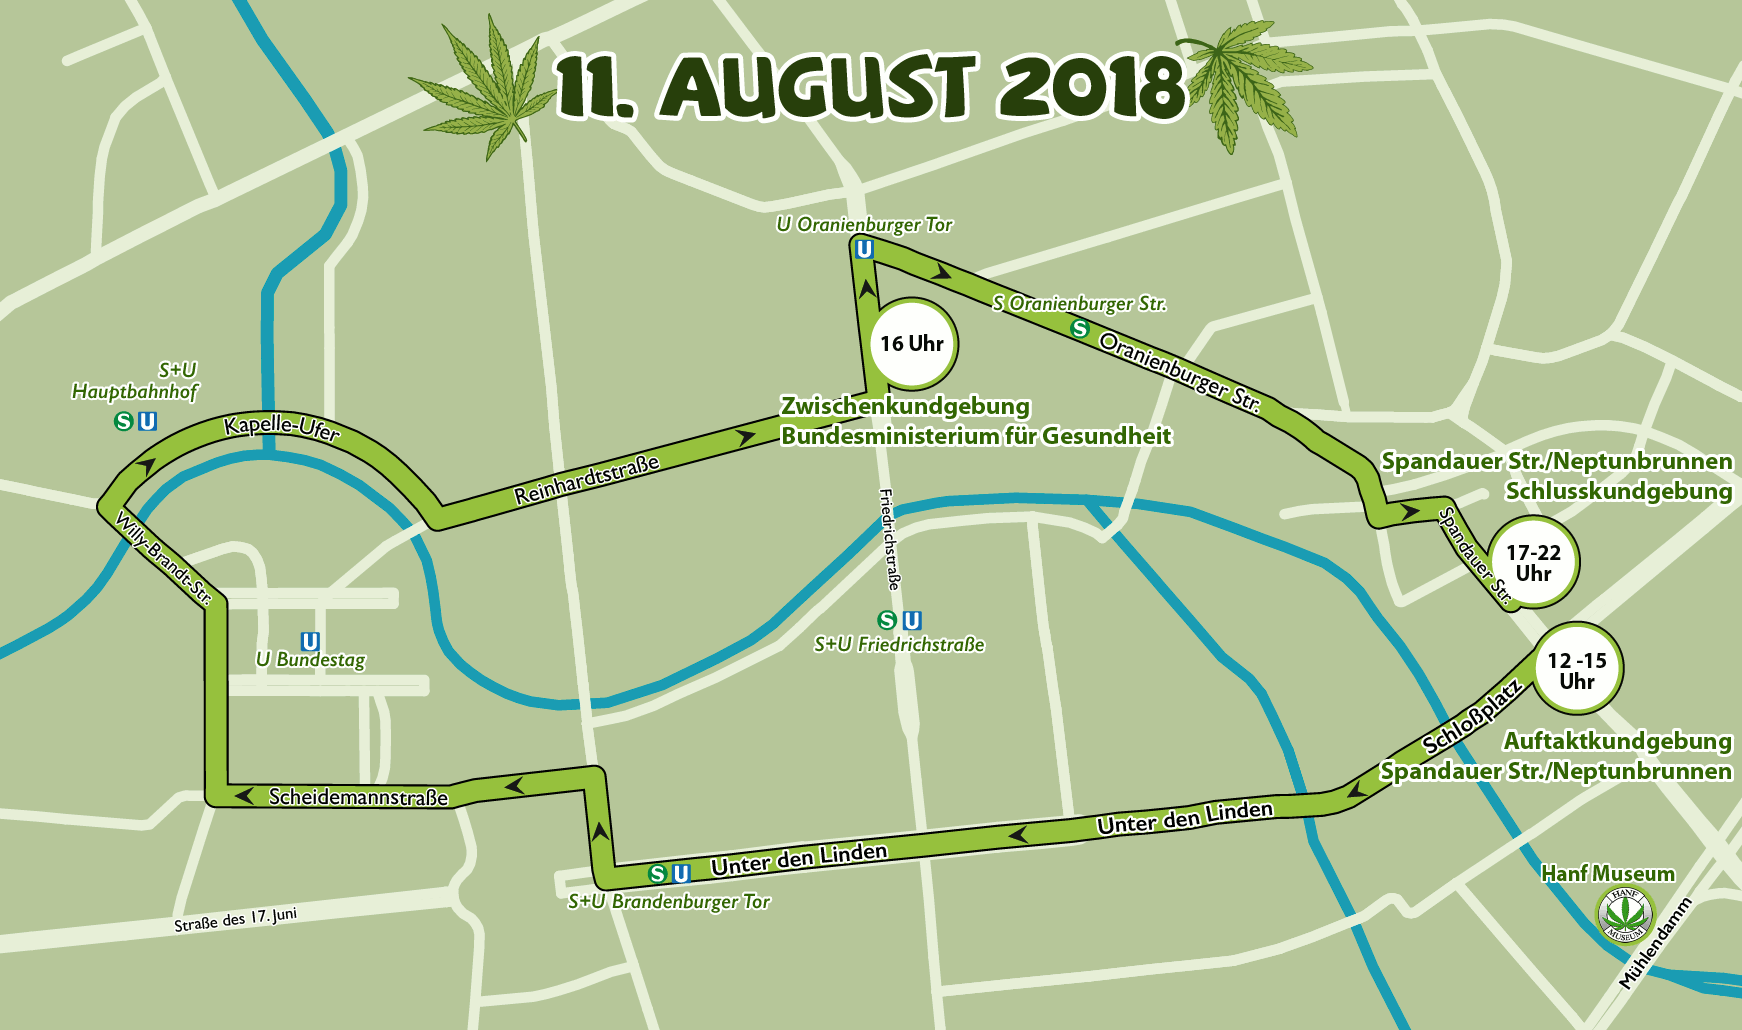 Route der Hanfparade 2018 in Berlin